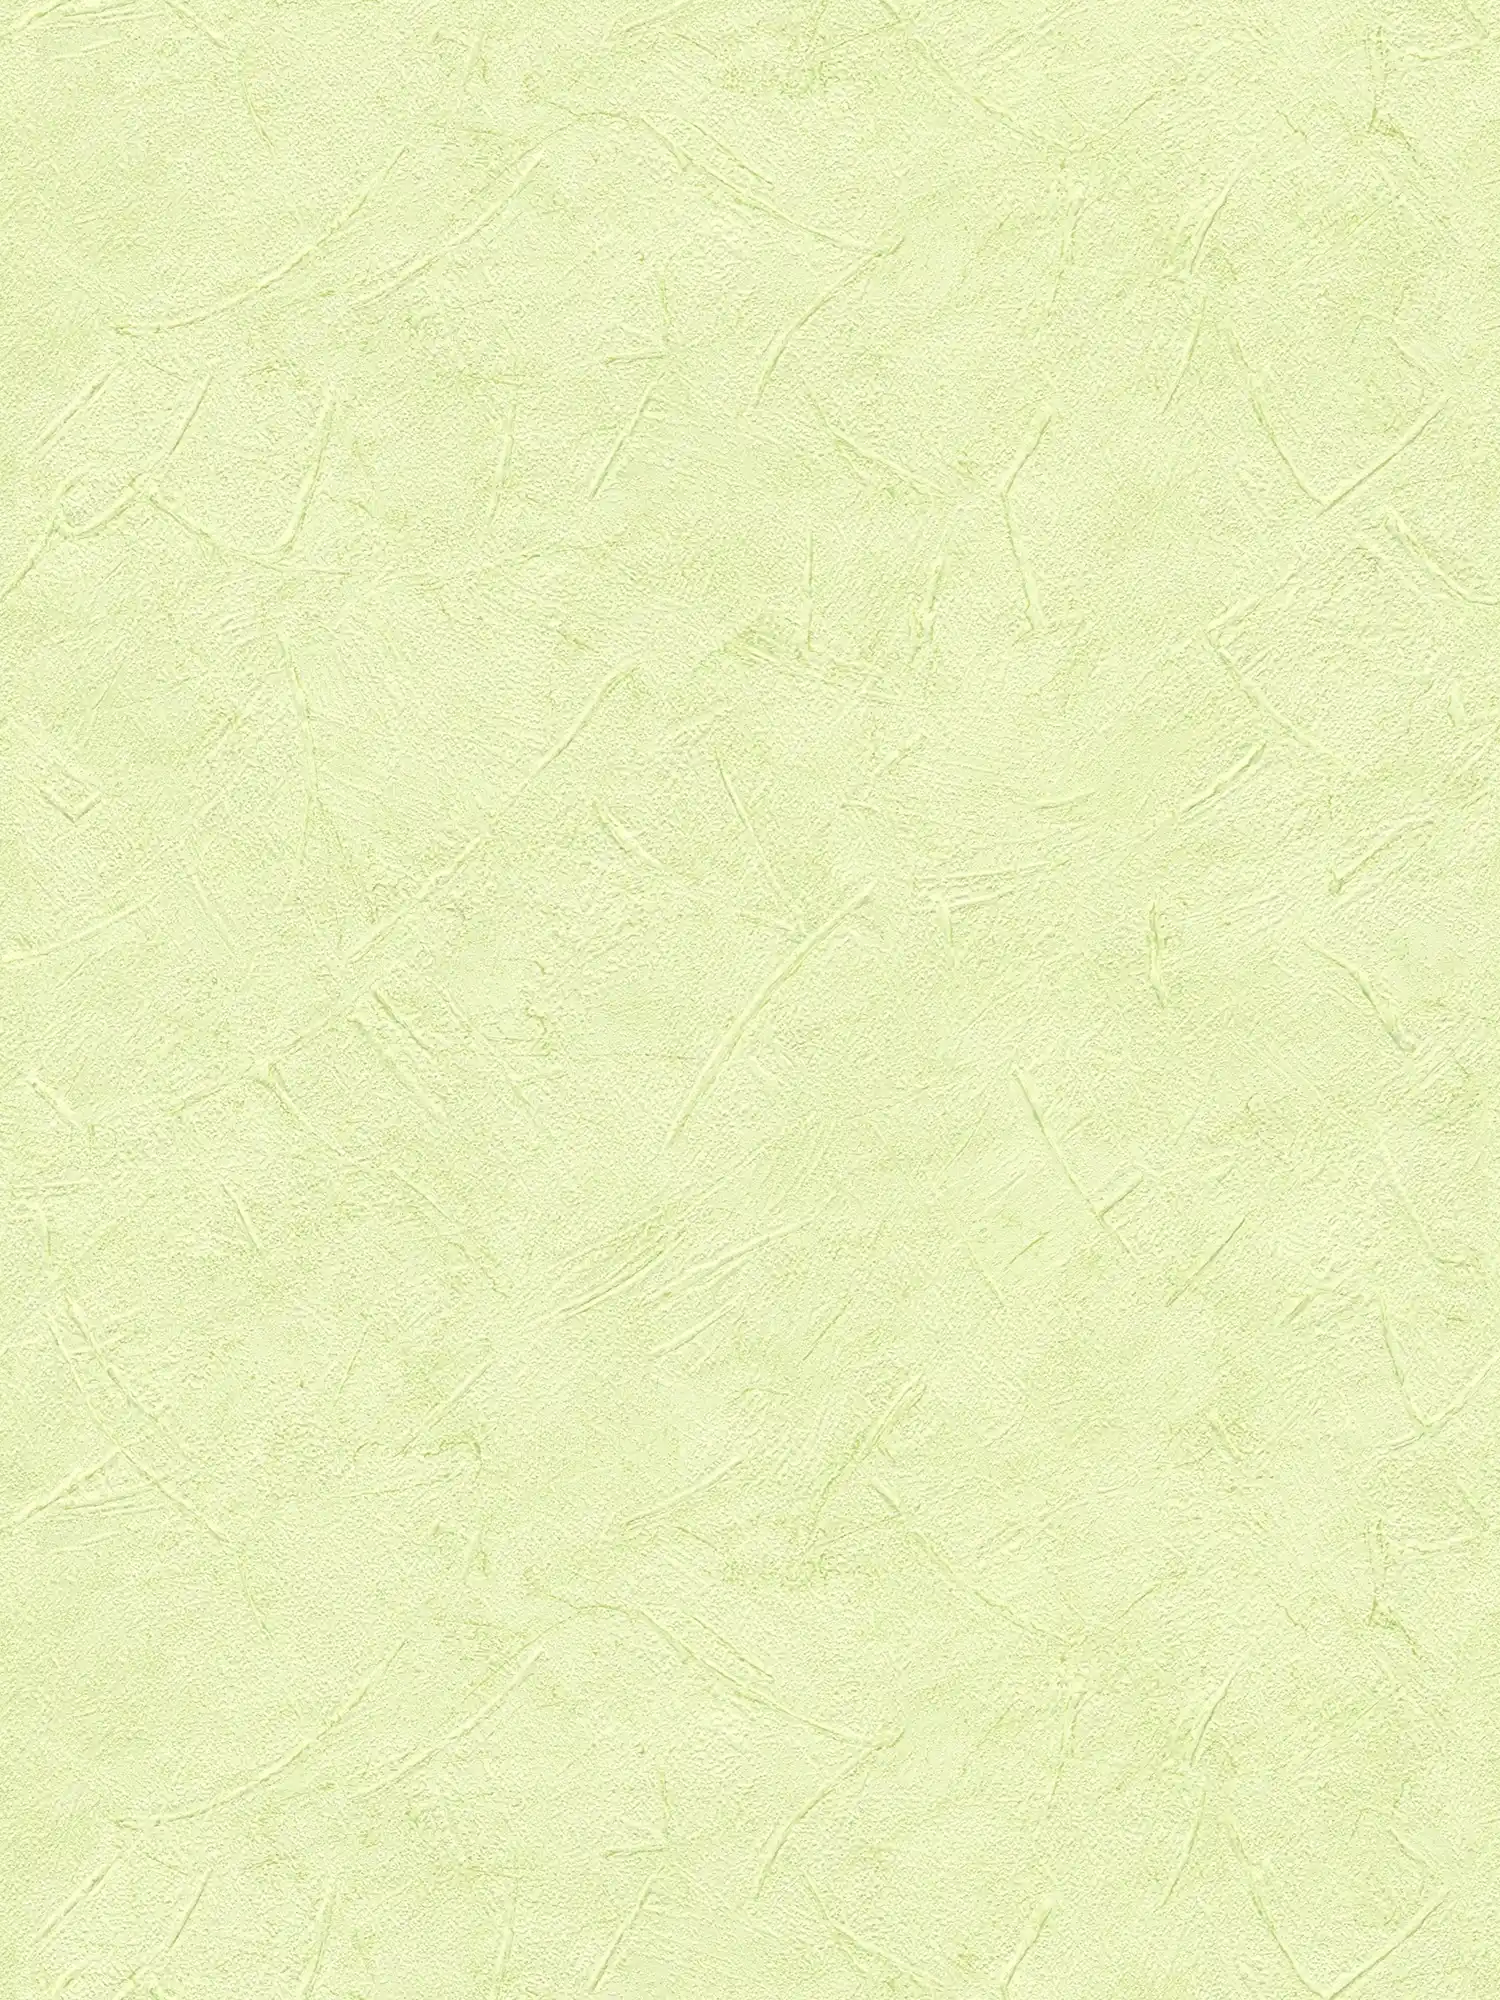             Troffel pleisterpapier behang lichtgroen met pleisteroptiek - groen
        